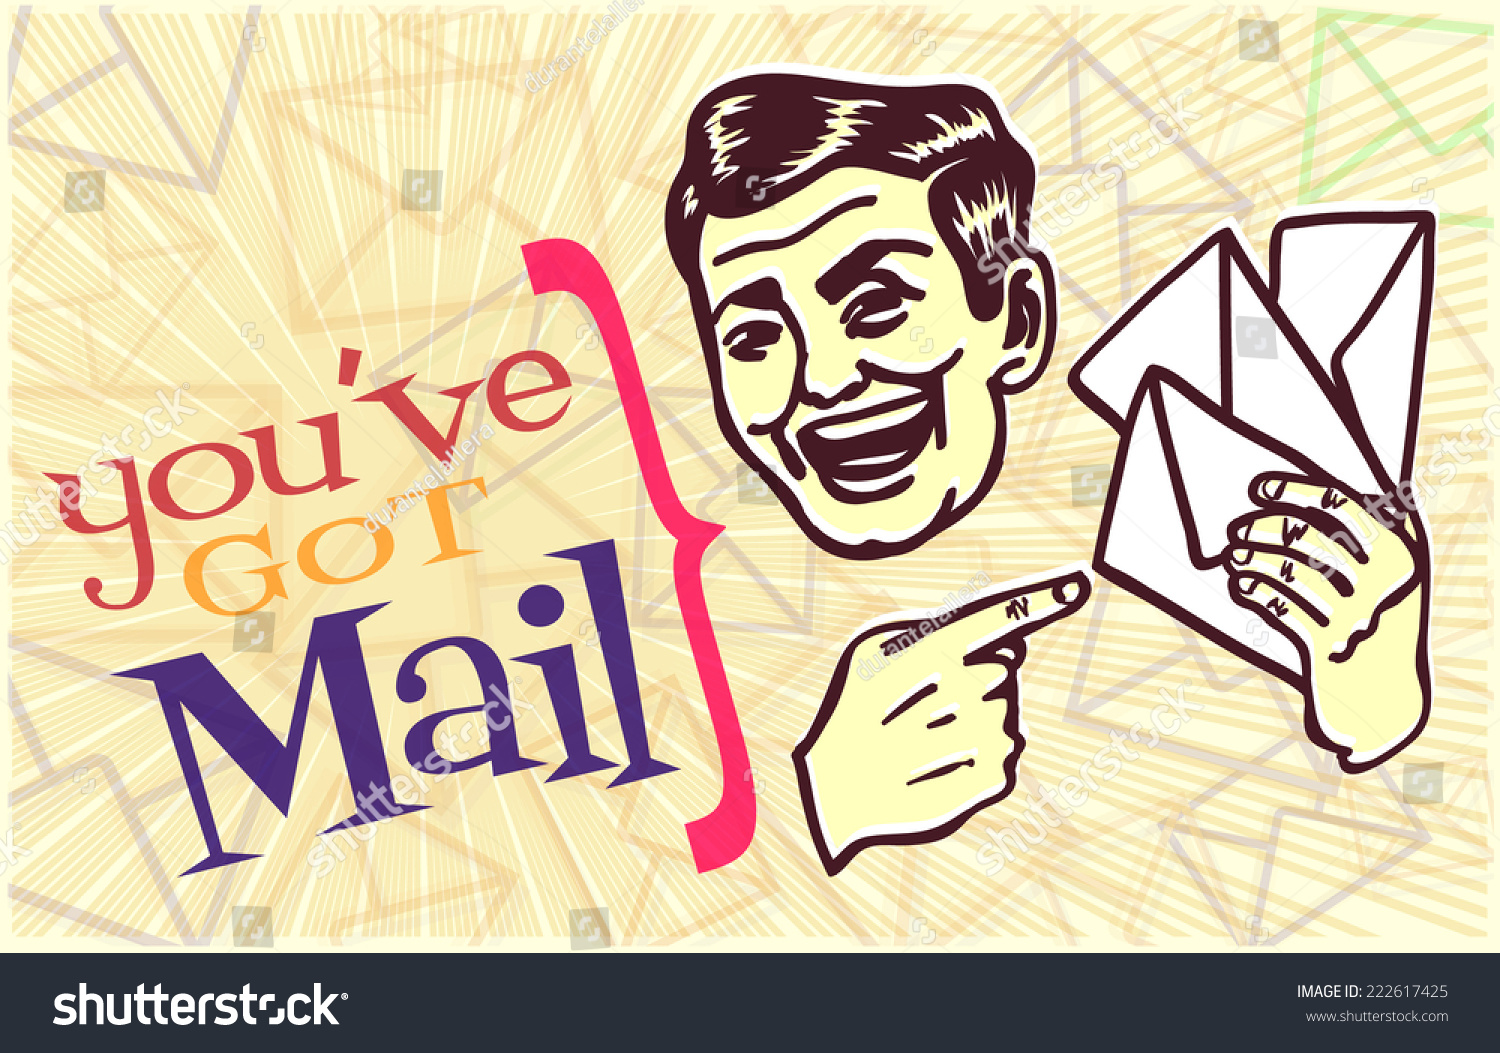 Shutterstock koleksiyonunda HD kalitesinde Youve Got Mail Retro Vintage Cli...